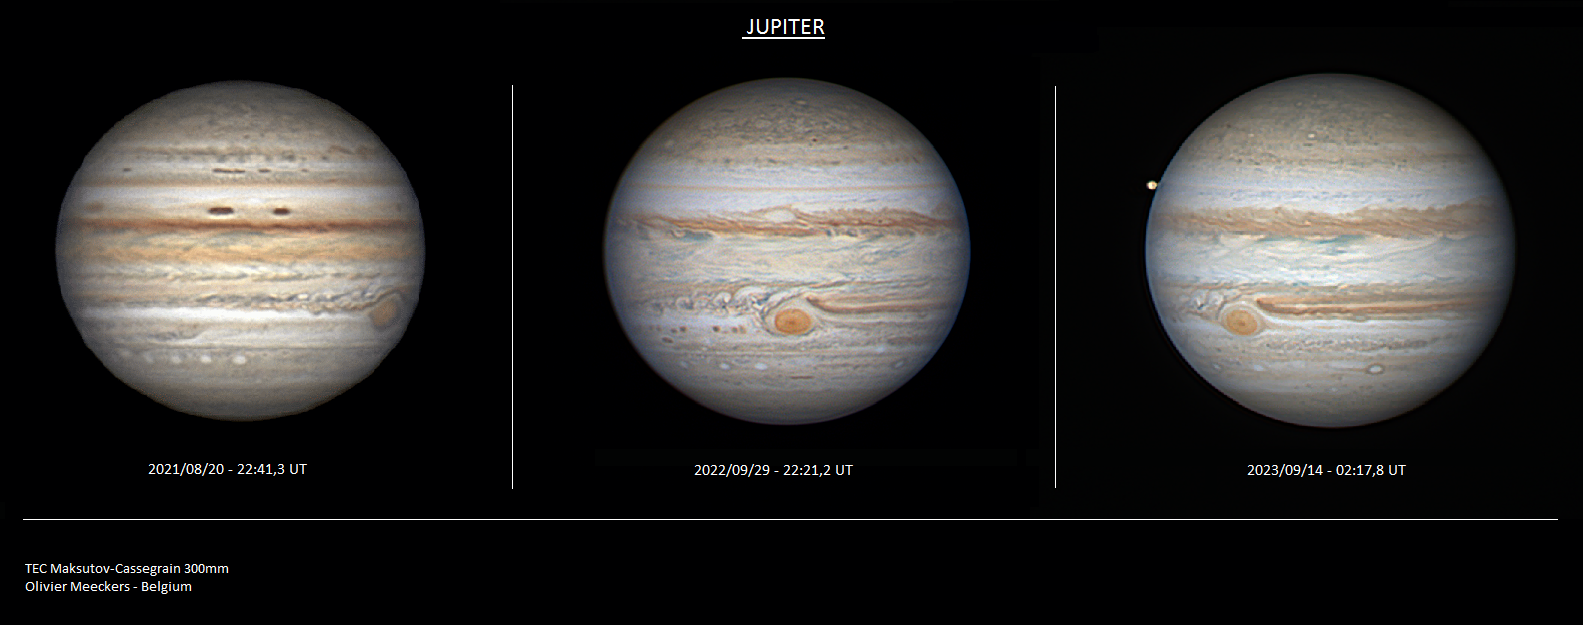 650c61219a0b4_Jupiter2012-2023.png.f2494407a7ac6eed4963c7825d47be53.png